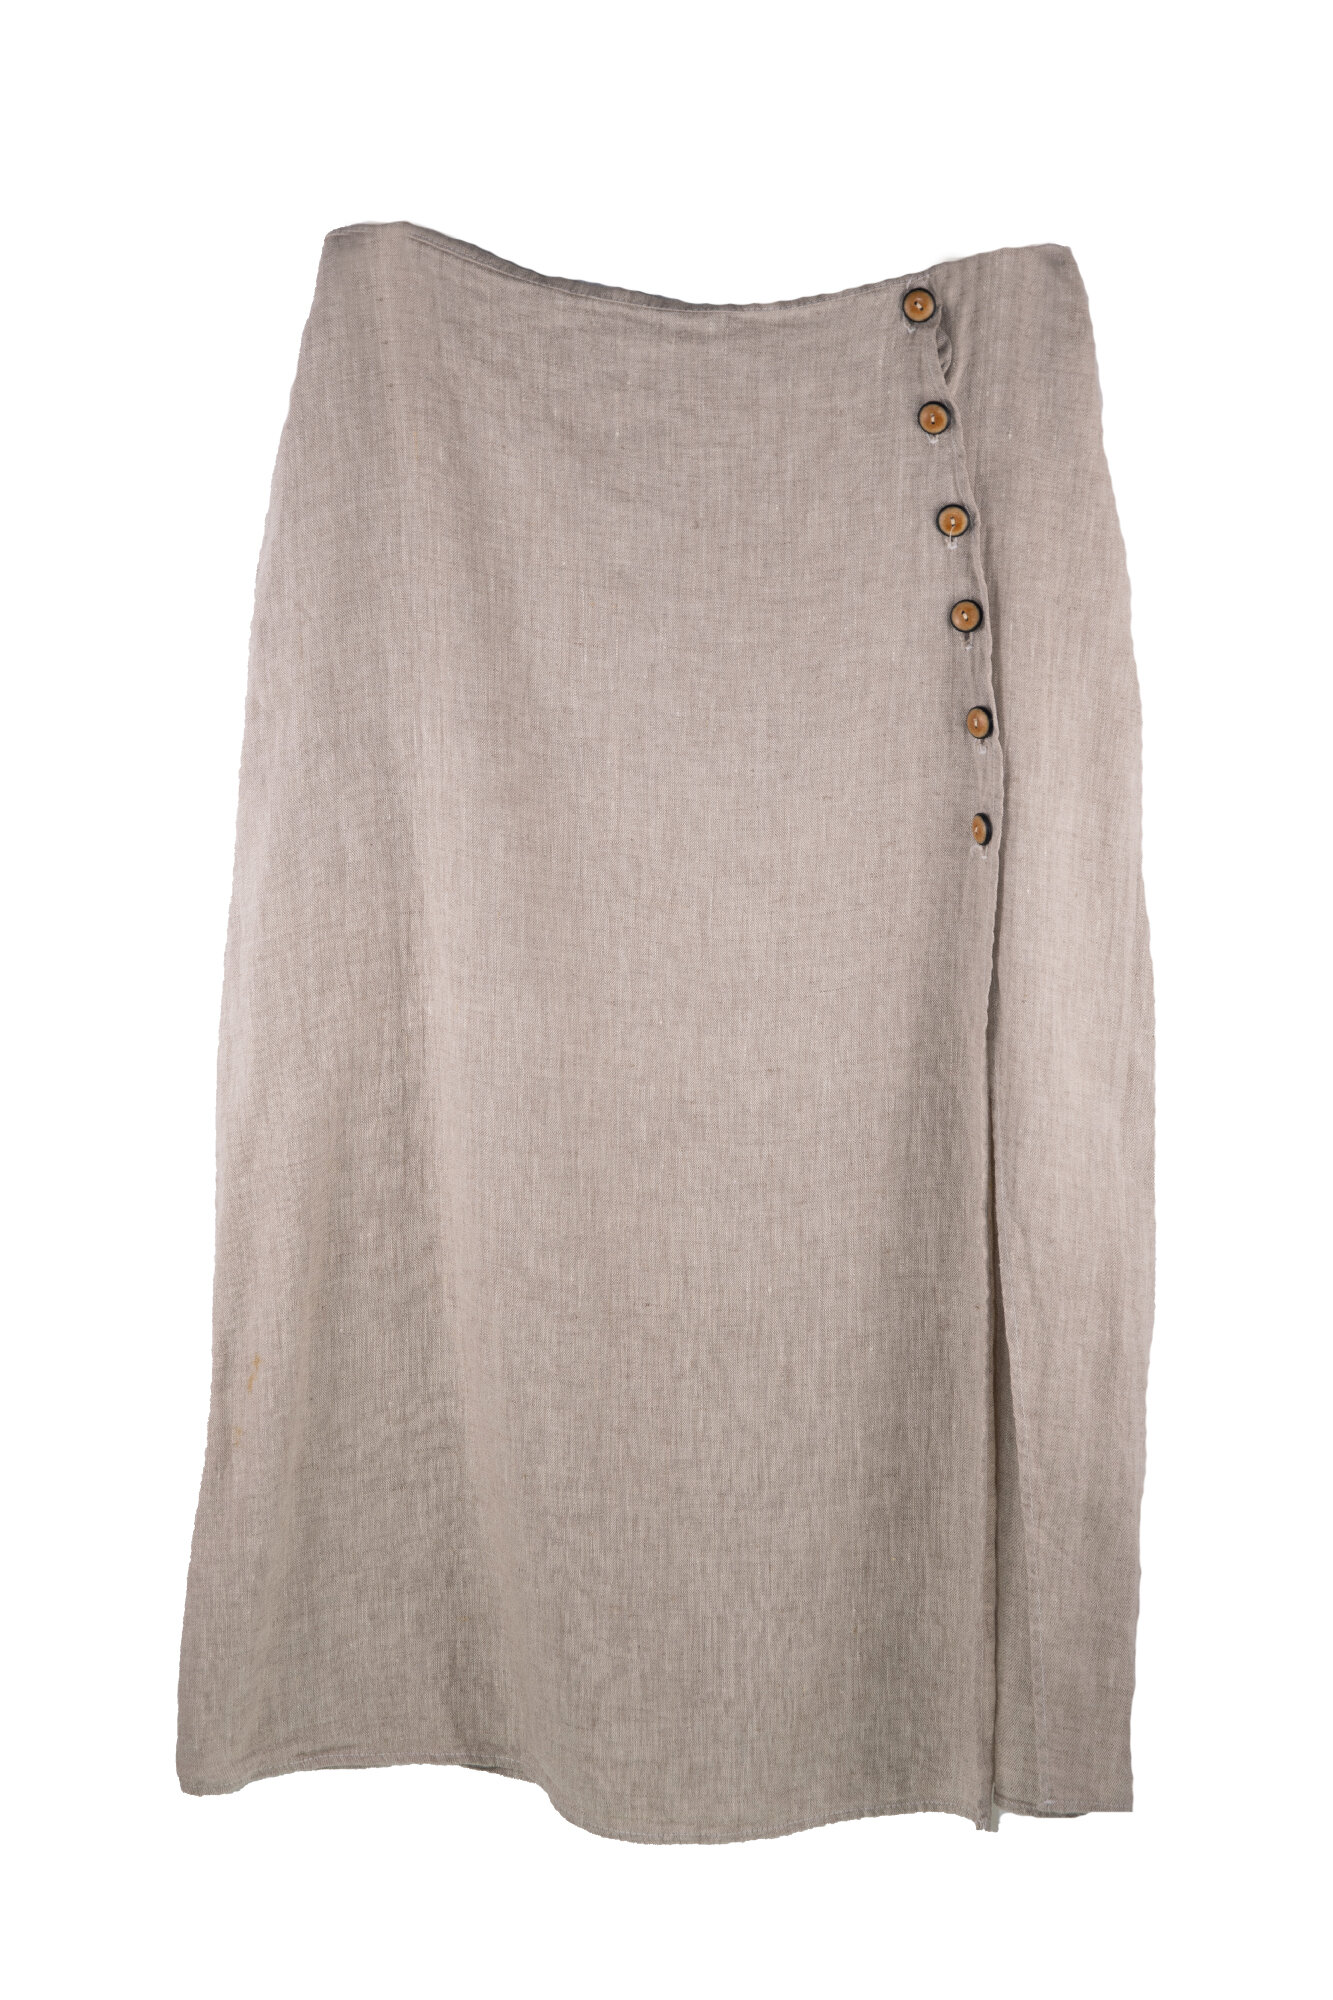 Linen Skirt with Buttons in Oatmeal — LeParisPetit by I love linen